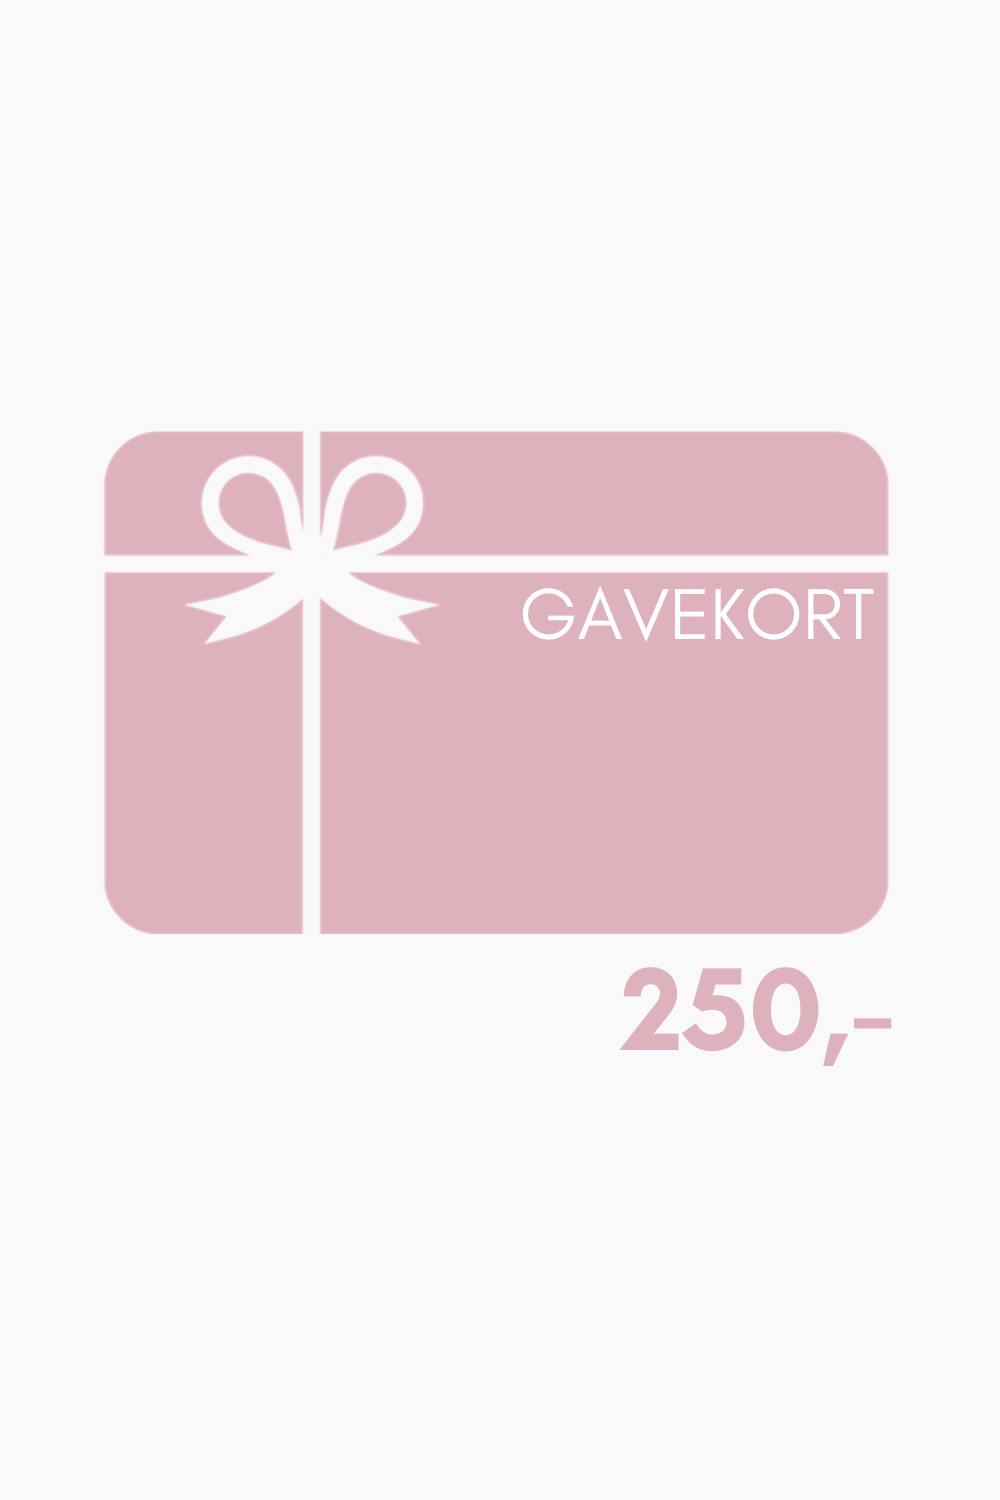 QNTS Gavekort 250 kr - 250